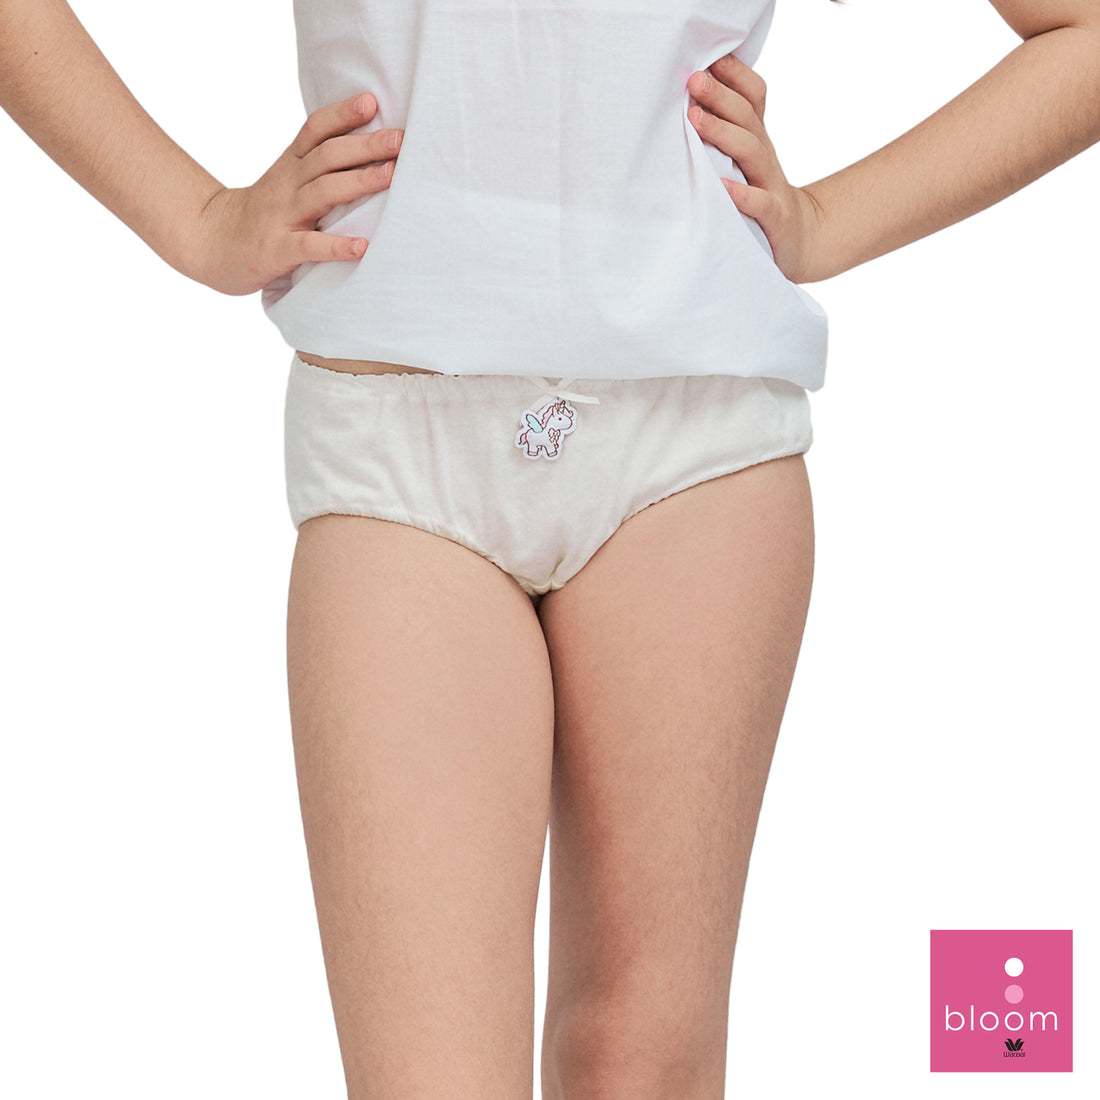 Wacoal Bloom Panty กางเกงในร้อยยางสำหรับเด็ก Pack 3 ชิ้น  รูปแบบ Half  รุ่น WU6A33 สีขาว (WH)